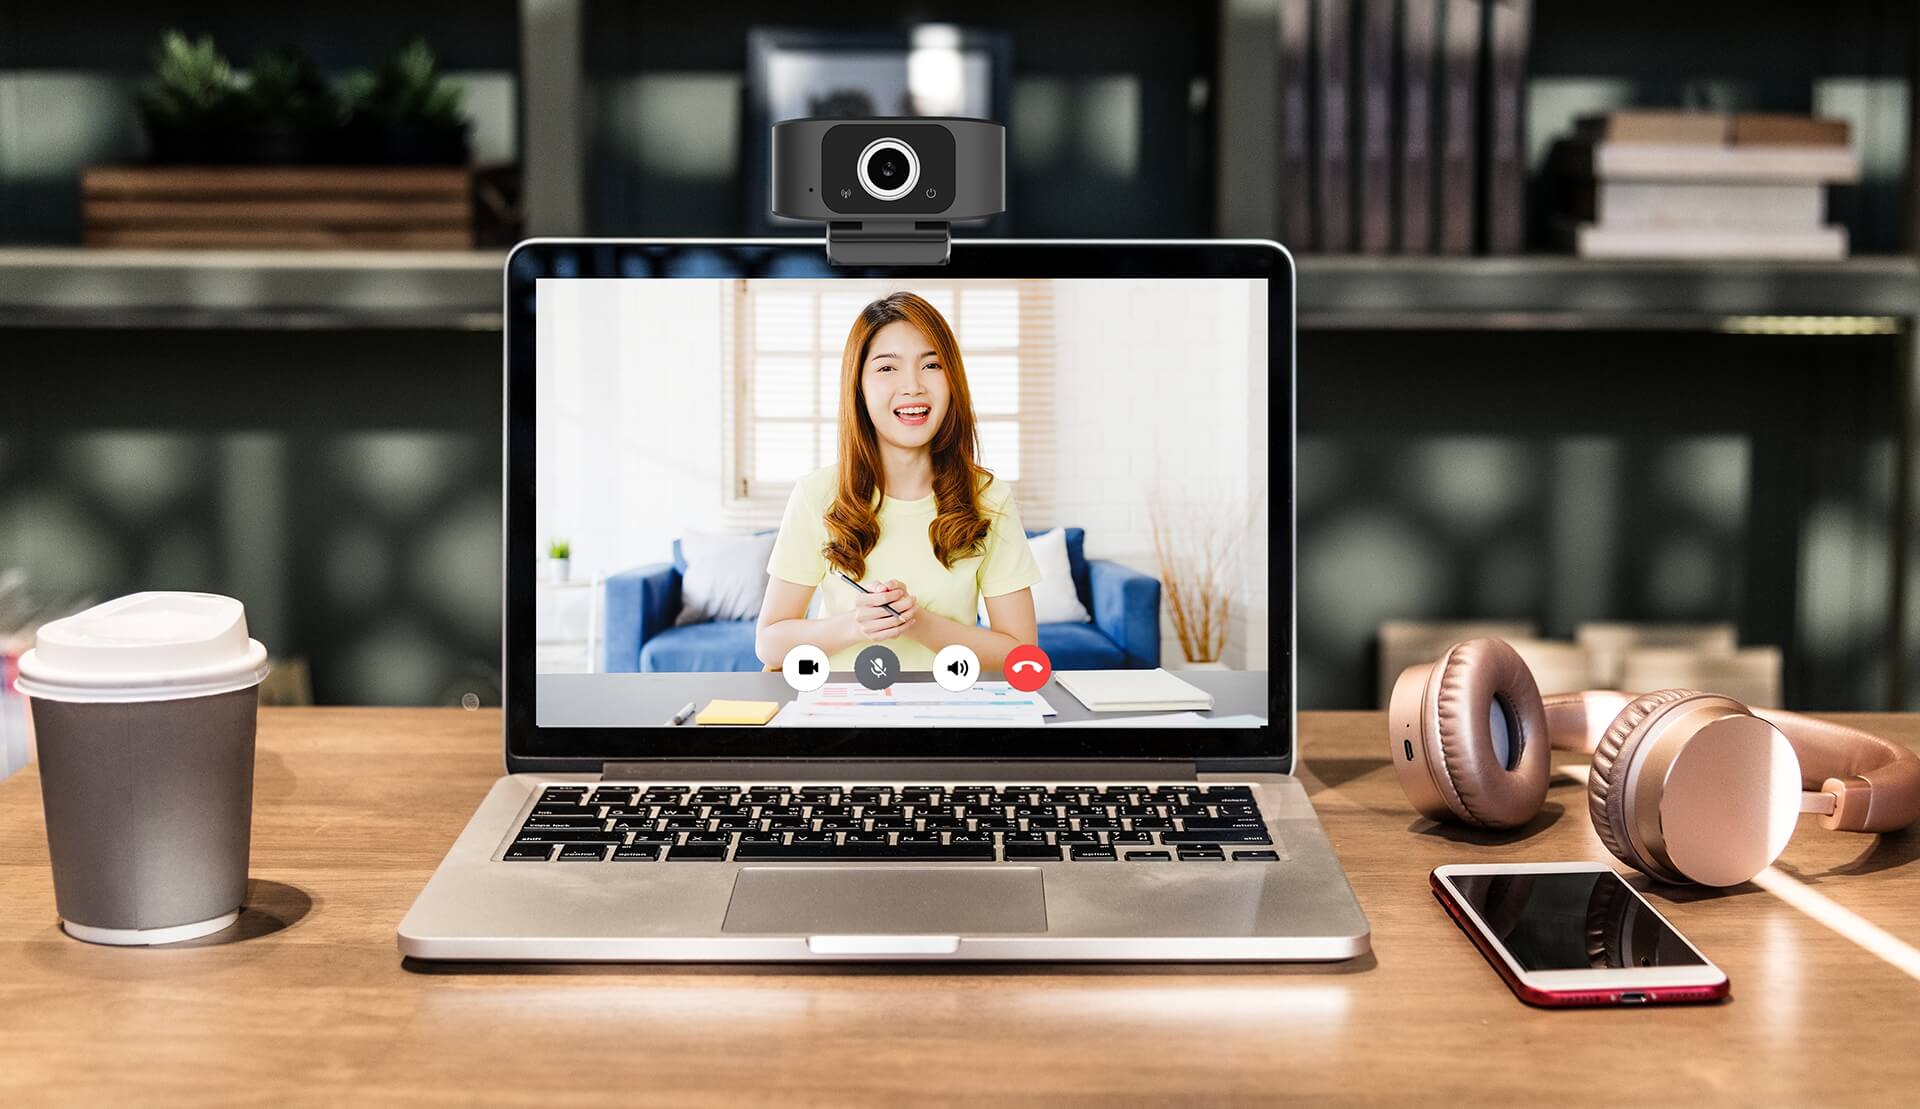 Vidlok webcam w77 Full HD 1080P Video Calls with Sonix Chipset